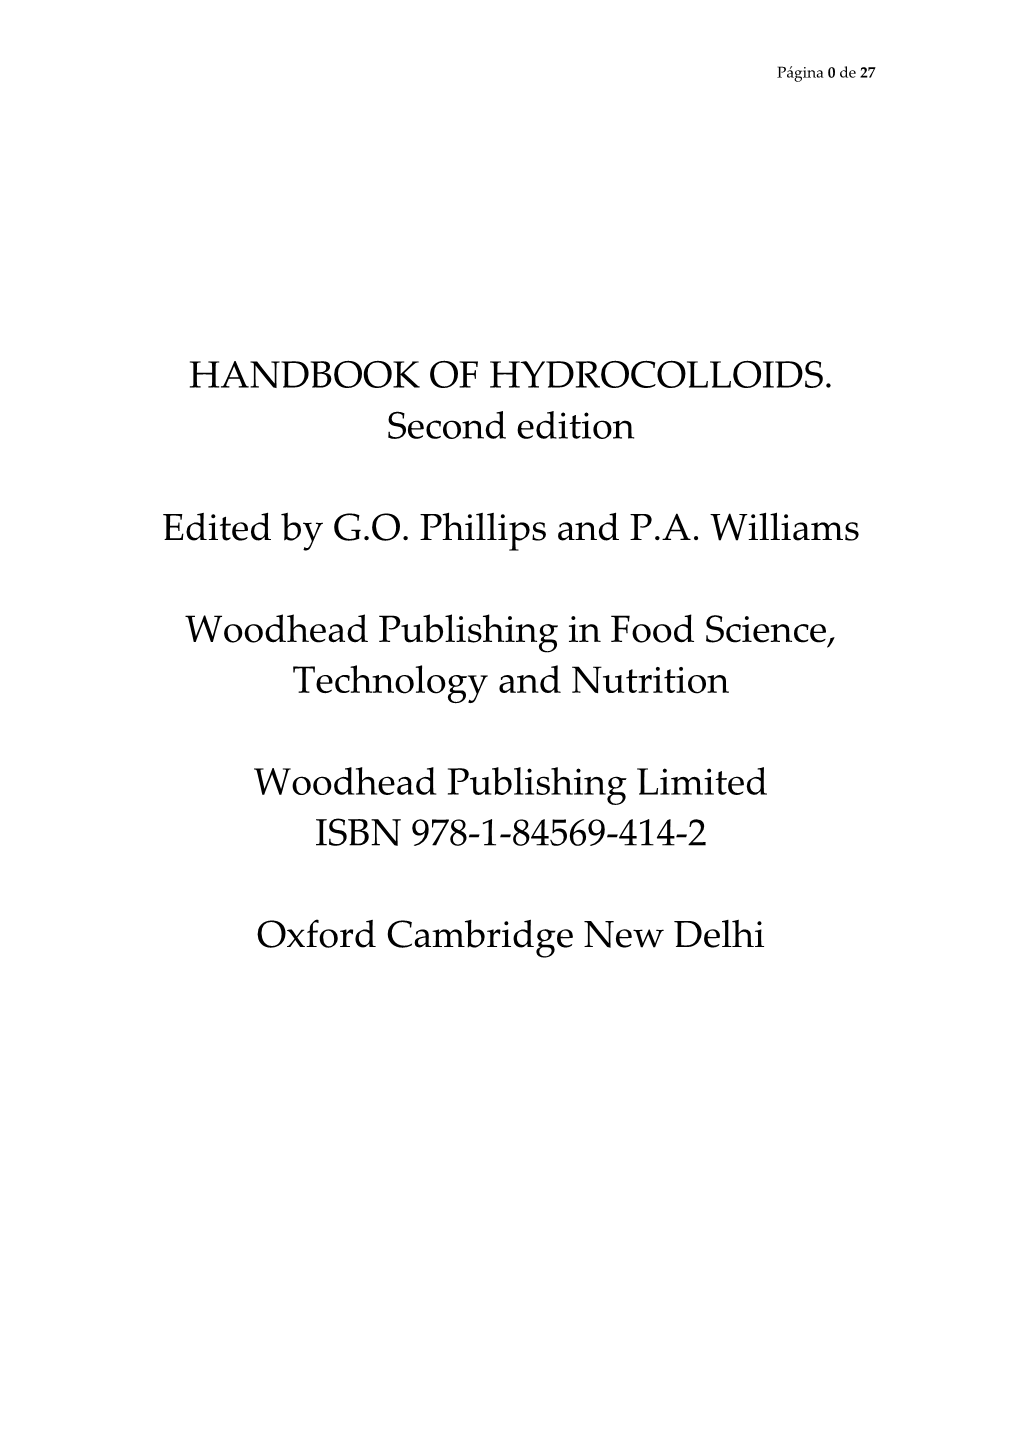 HANDBOOK of HYDROCOLLOIDS. Second Edition Edited by G.O